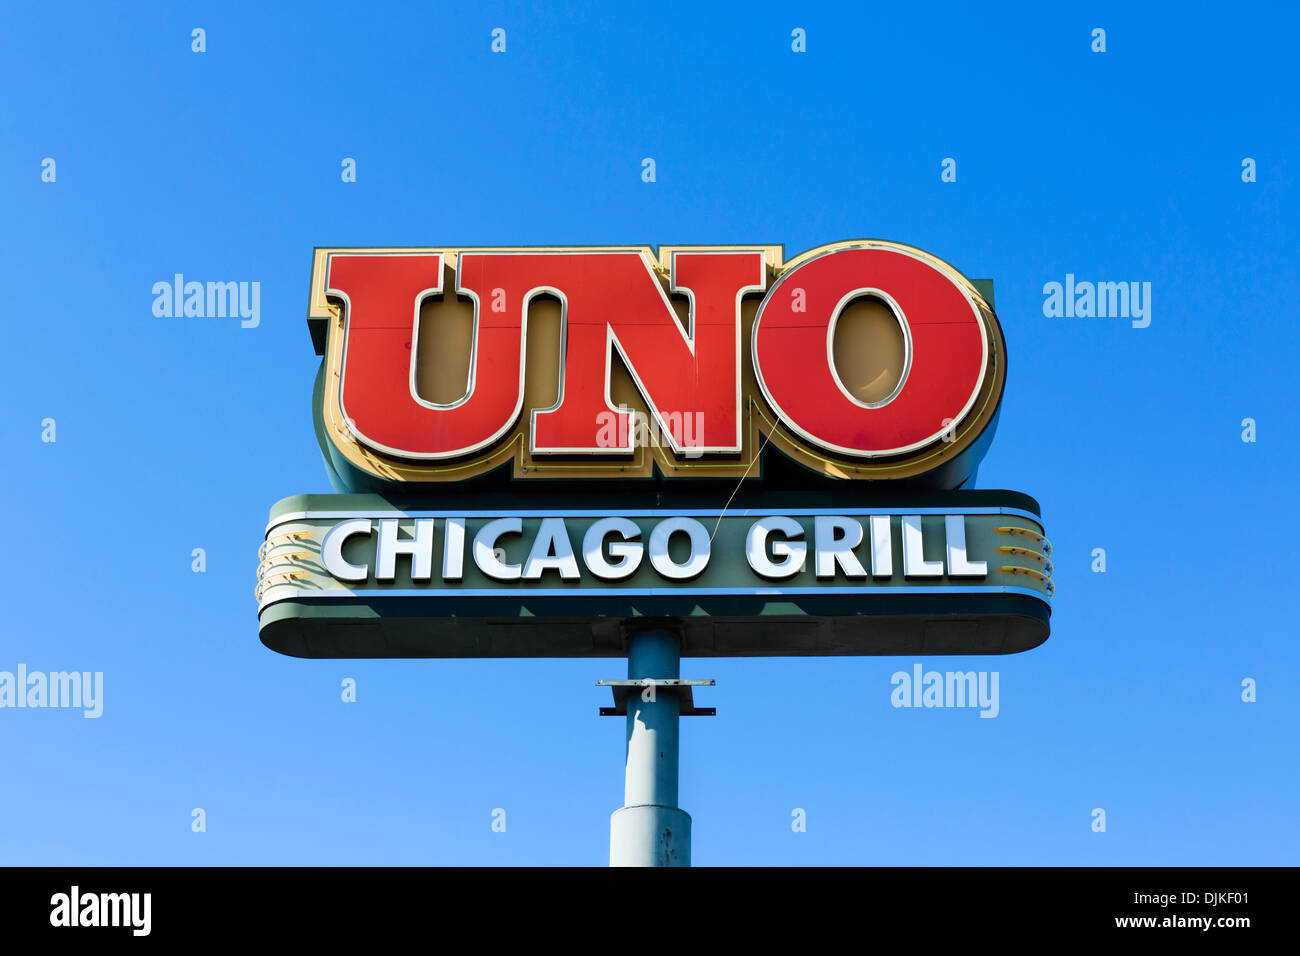 Uno Chicago Grill restaurant sign, Central Florida, USA Stock Photo